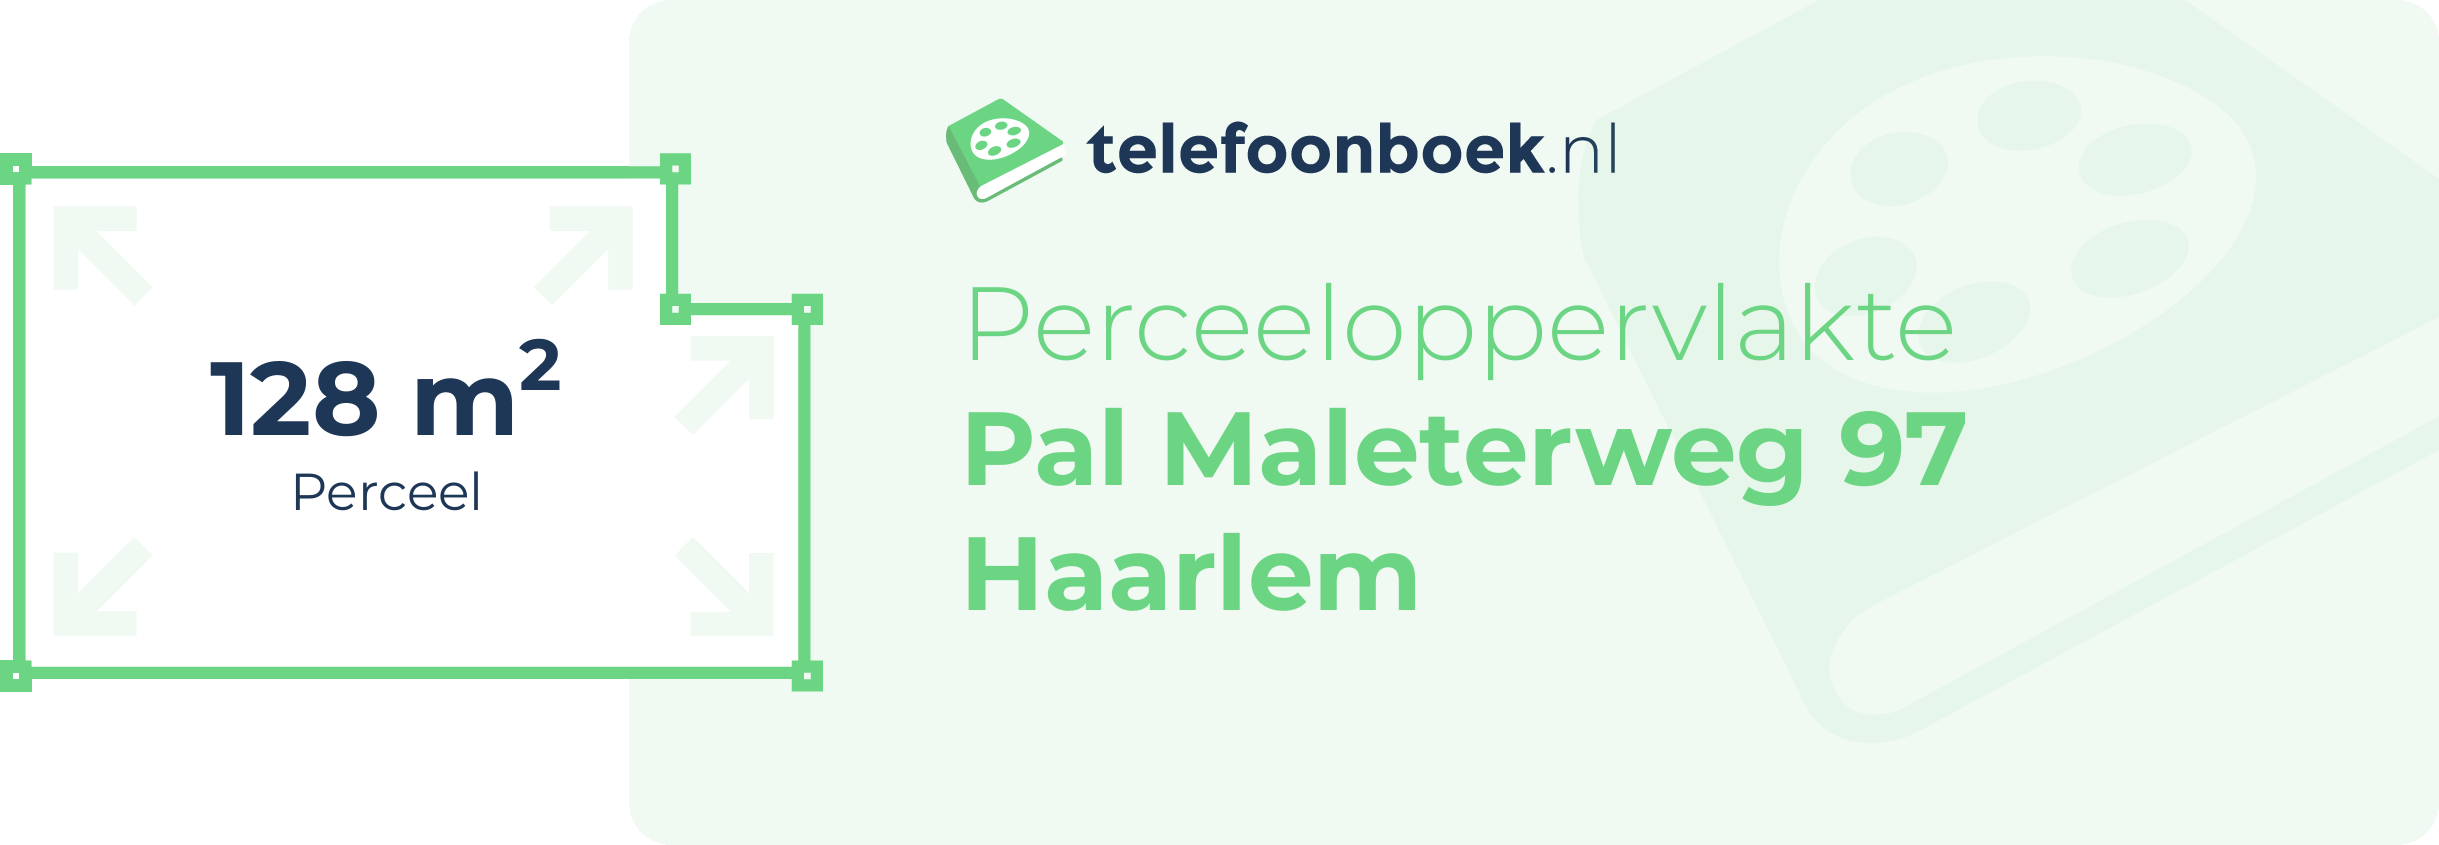 Perceeloppervlakte Pal Maleterweg 97 Haarlem